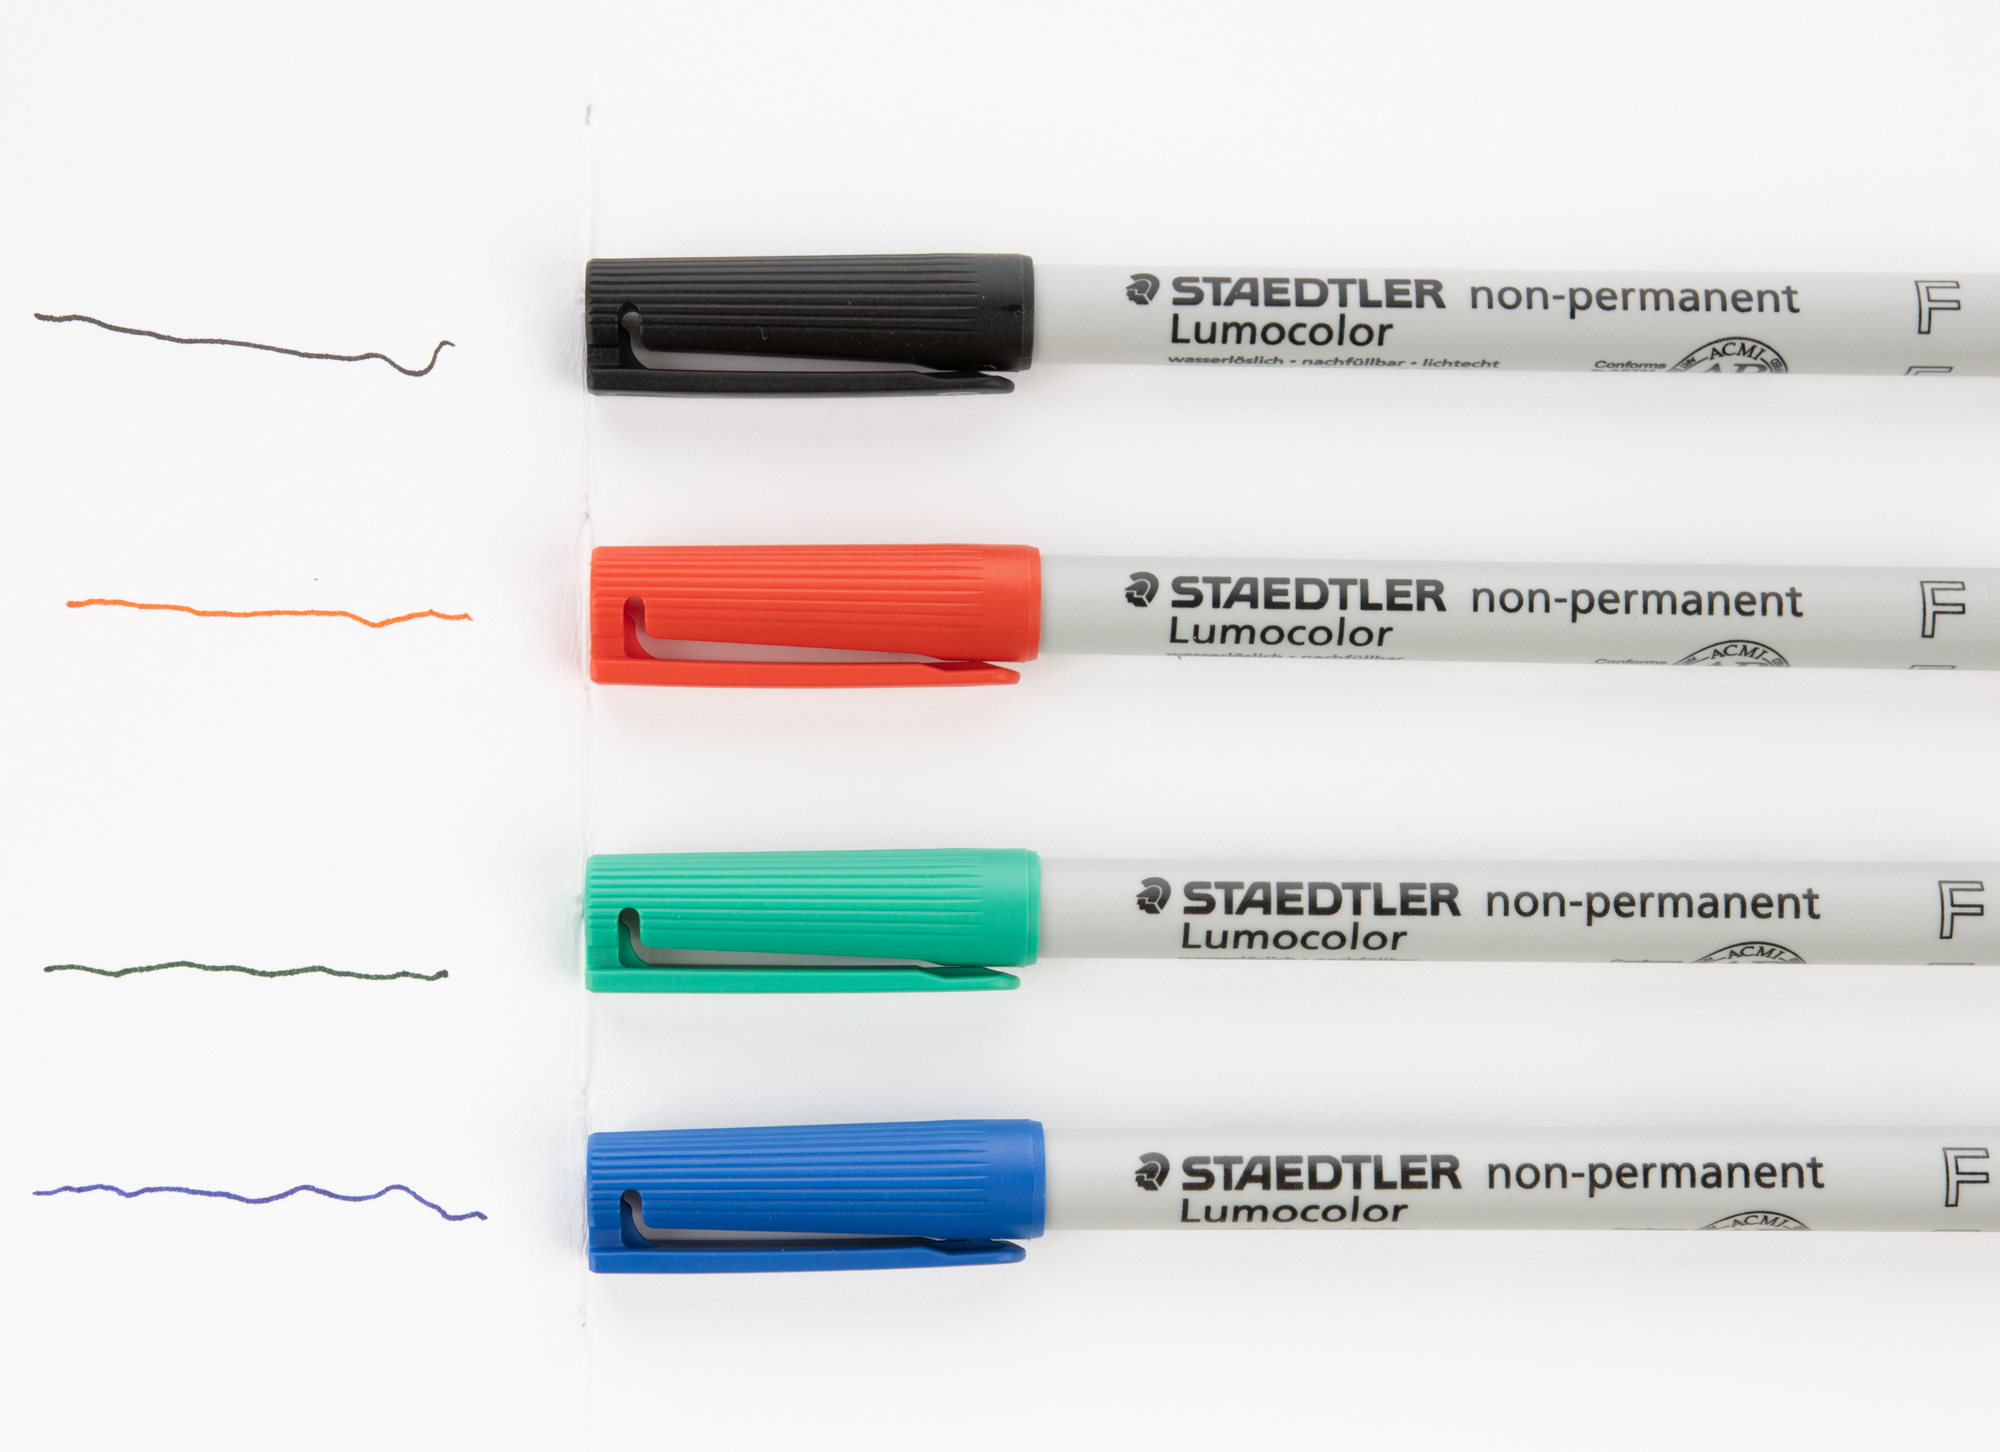 Staedtler Lumocolor Non-permanent pen